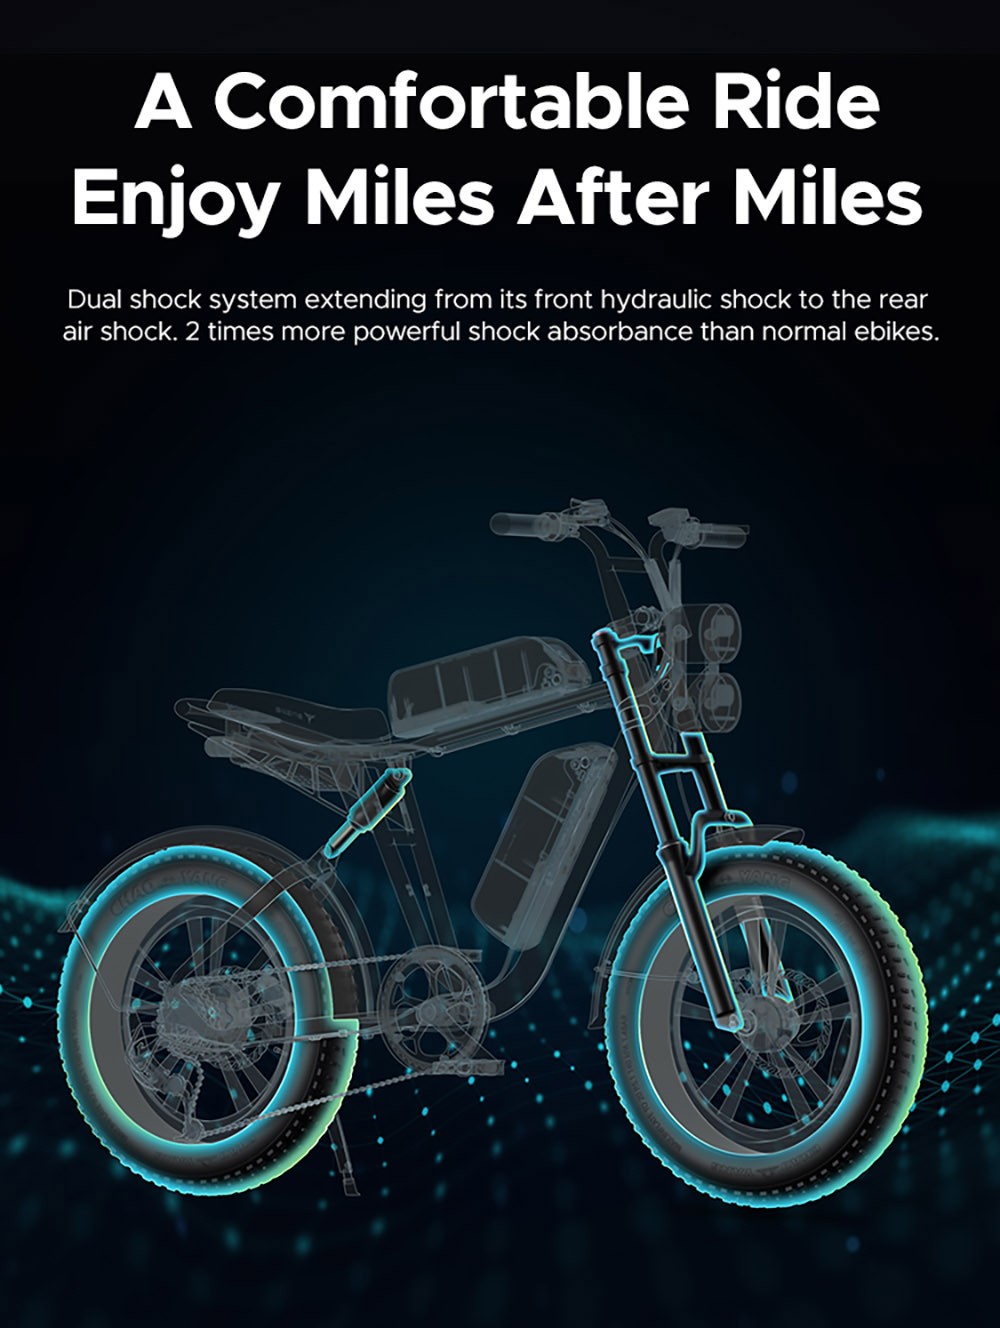 ENGWE M20 Elektrische fiets met dubbele 13Ah accu, 20*4,0 inch dikke banden, 750W Brushless motor